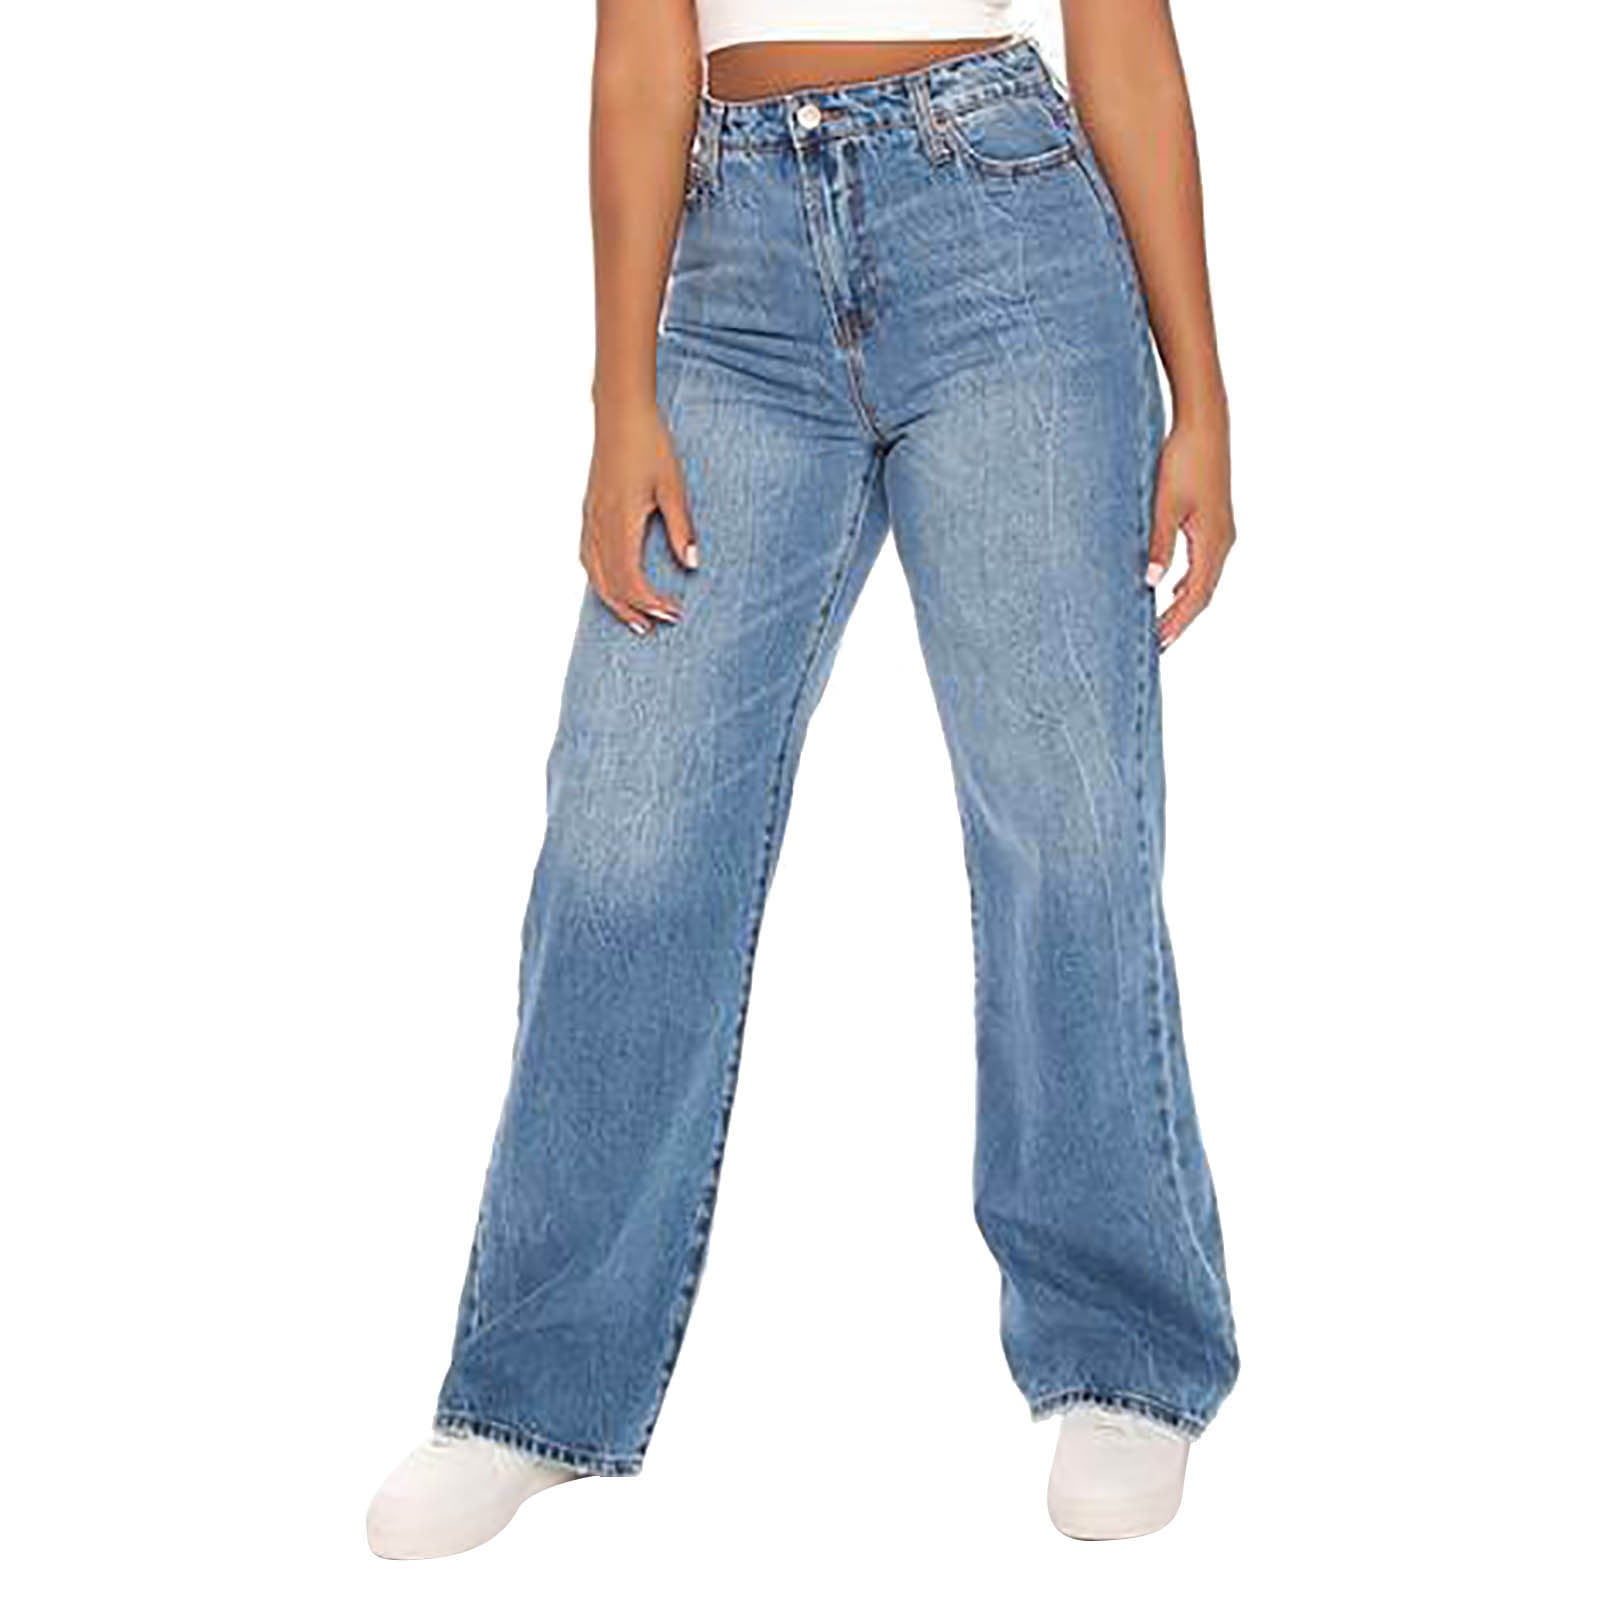 Buy TNQ Women Denim Full Flared Palazzo Pants/Cotton Denim Trousers/Denim  Jeggings (30, Blue) at Amazon.in